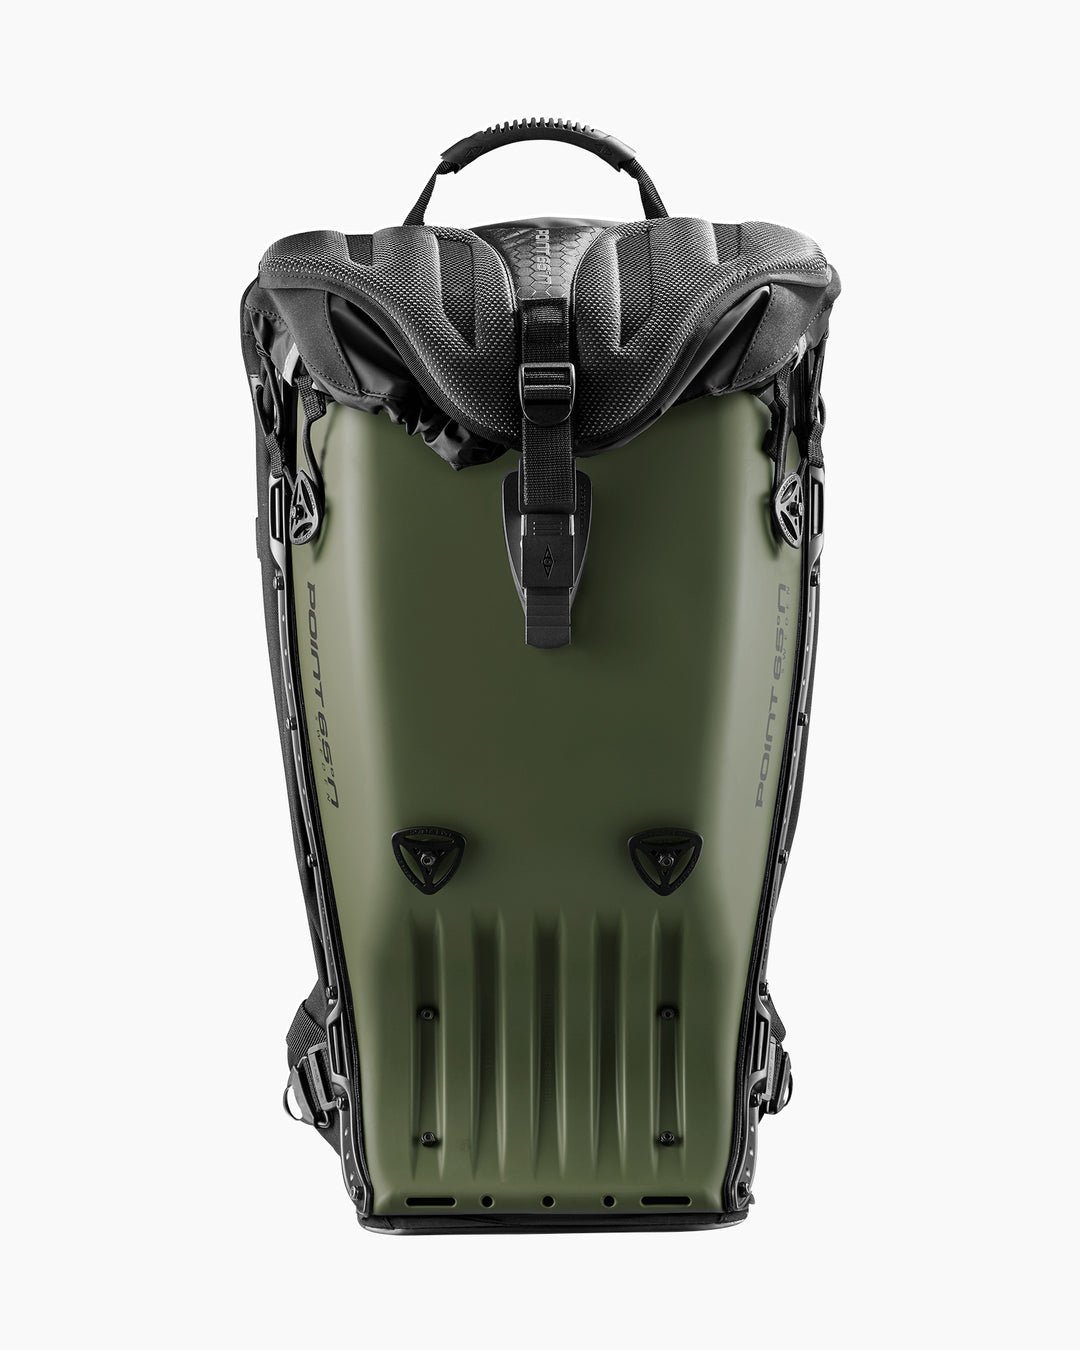 Boblbee GTX 25L Hardshell Backpack